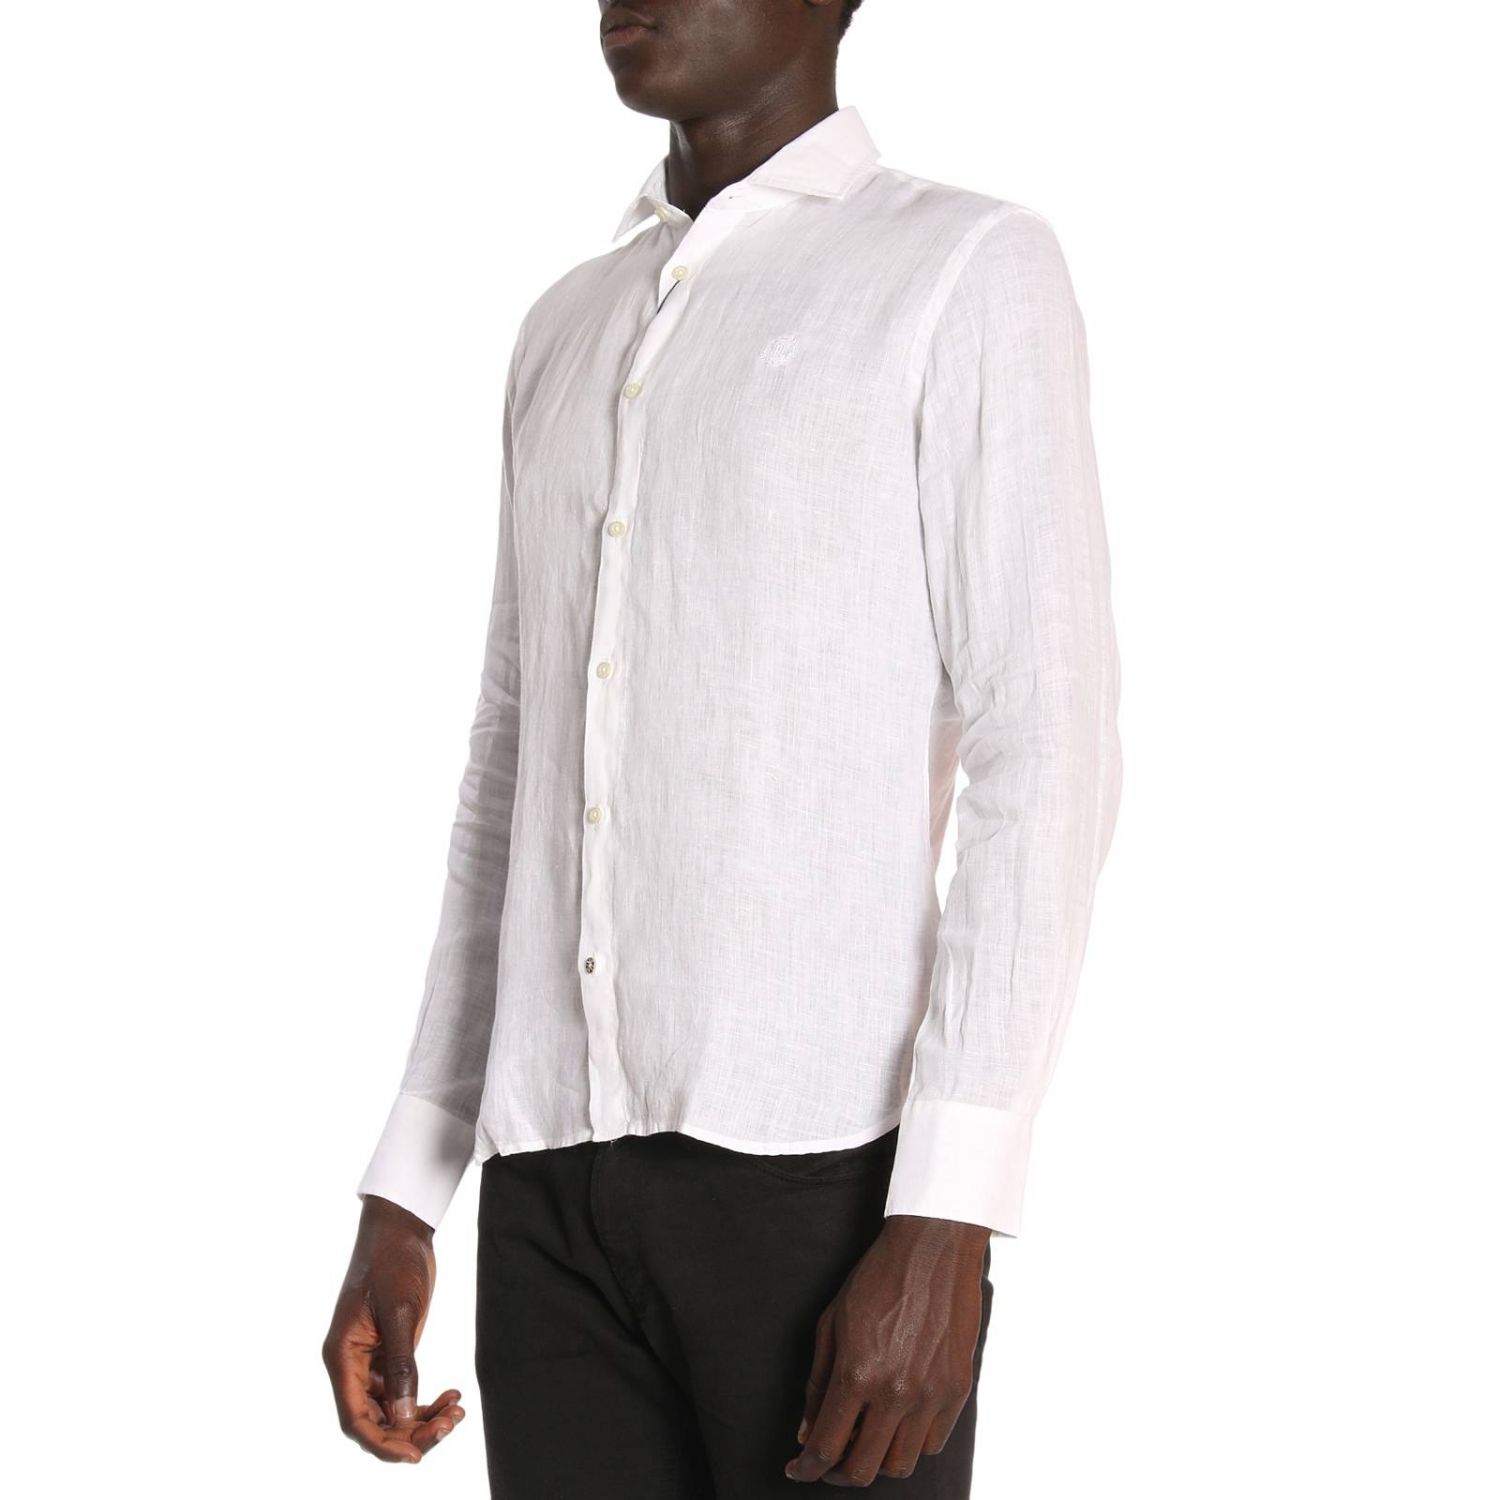 Henri Lloyd Outlet: Shirt men | Shirt Henri Lloyd Men White | Shirt ...